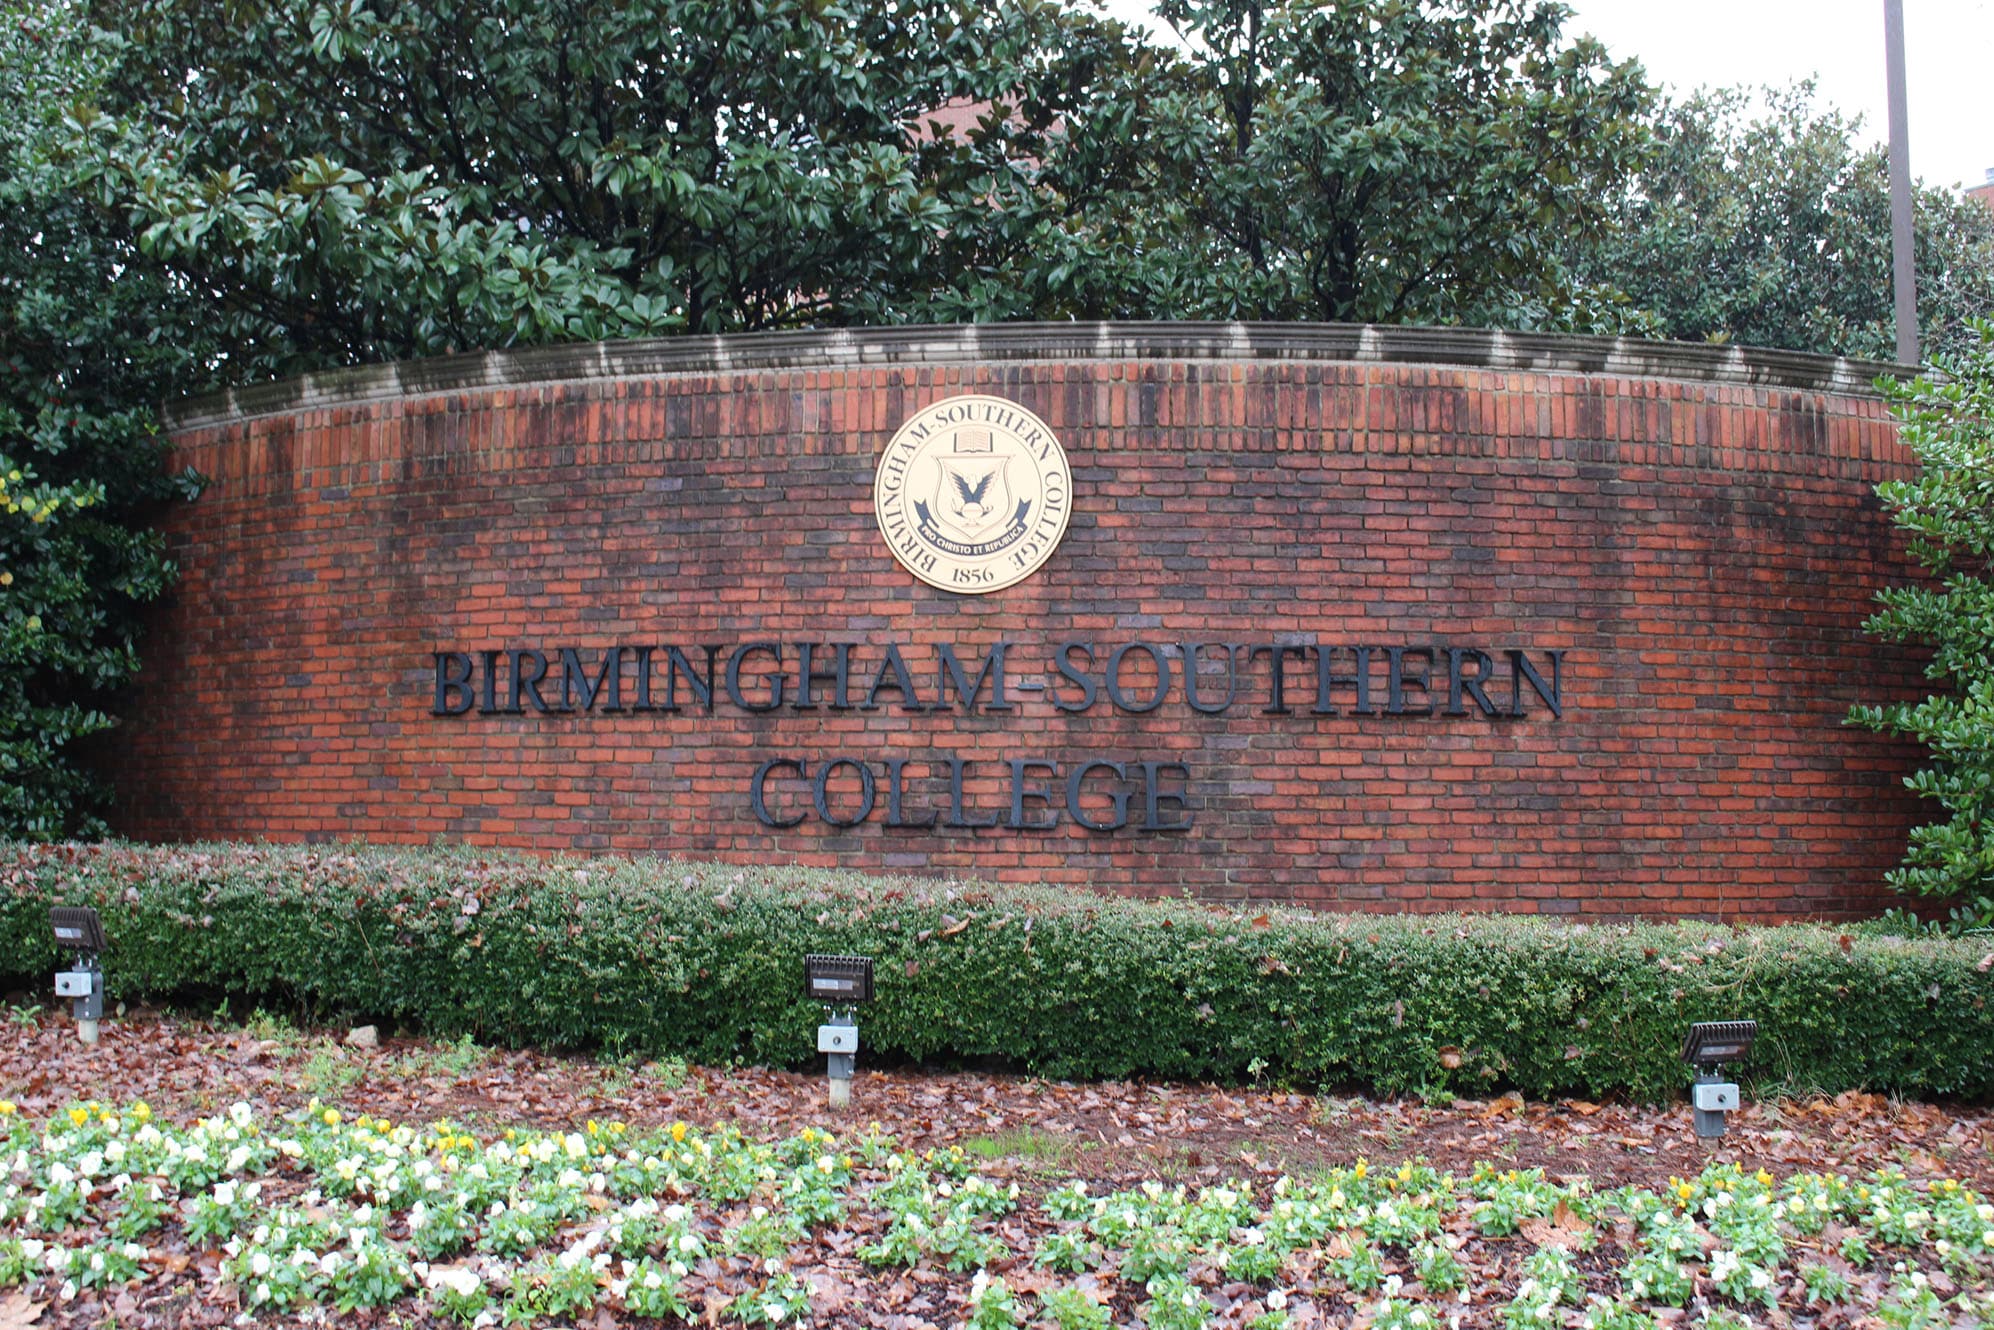 Birmingham Southern sues Alabama state treasurer WBHM 90 3